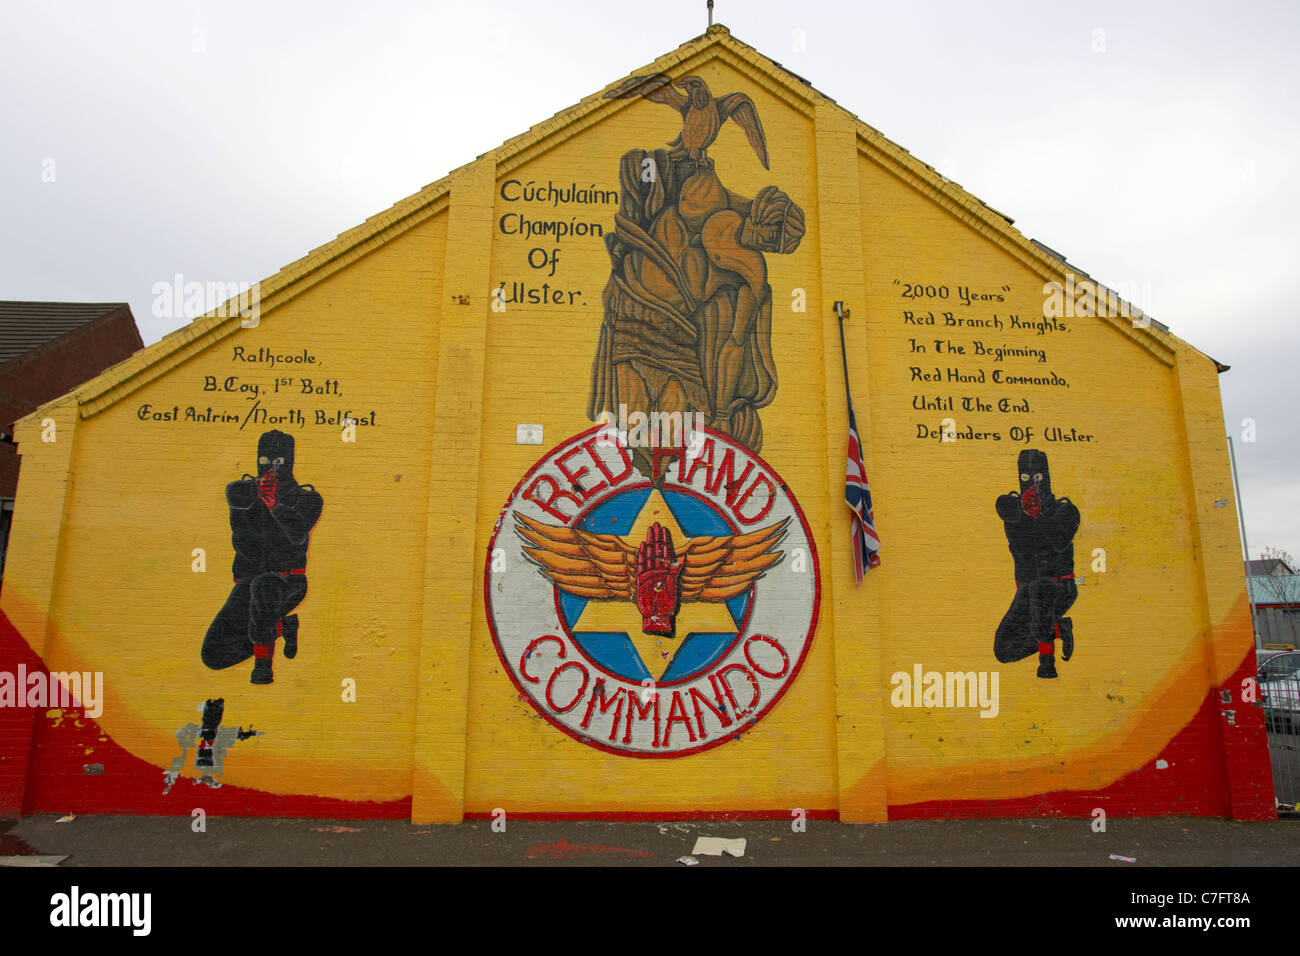 rathcoole red hand commando cuchulainn loyalist wall mural painting north belfast northern ireland Stock Photo